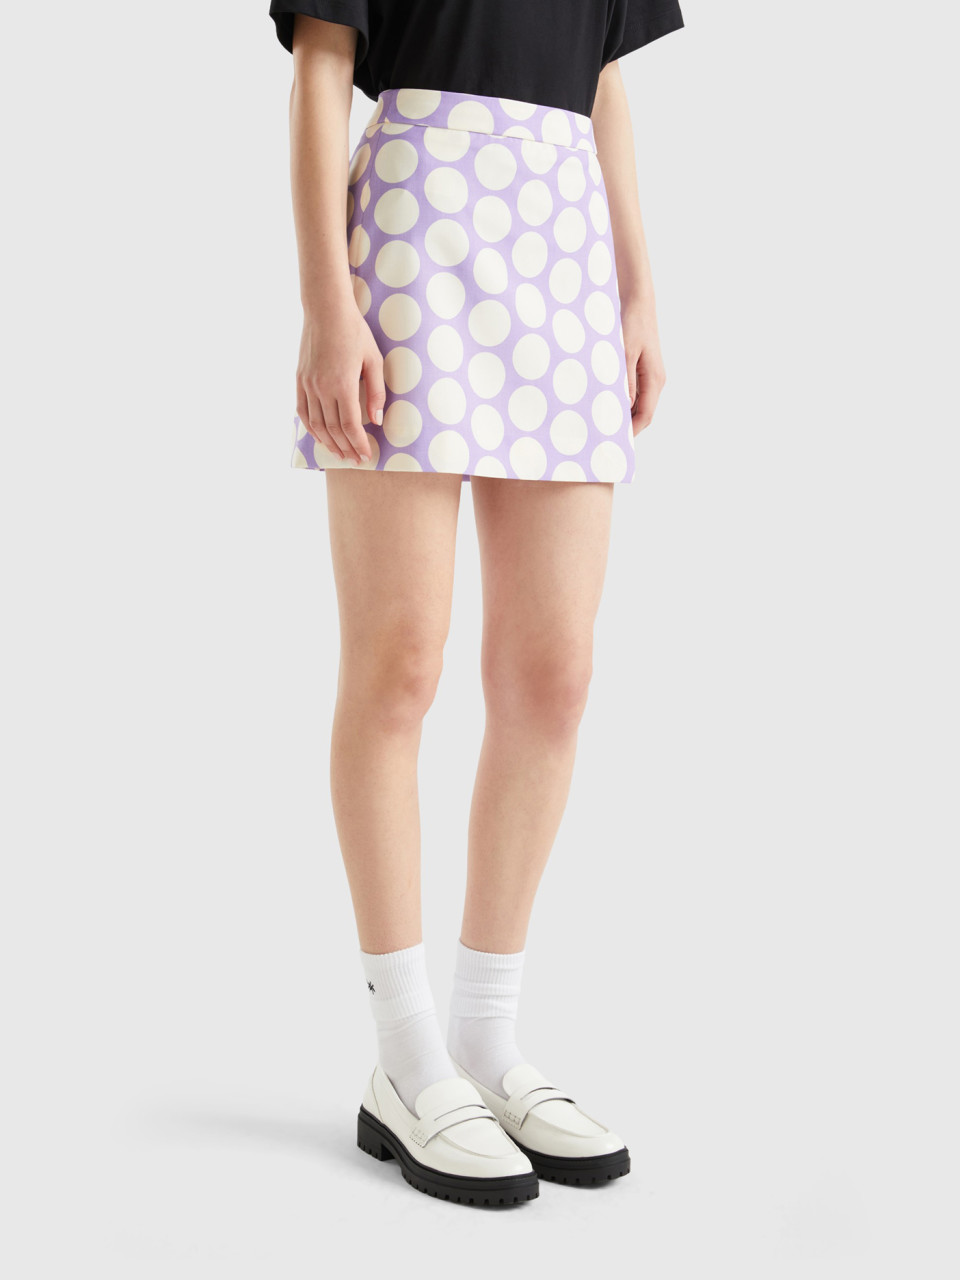 Benetton, Polka Dot Mini Skirt, Lilac, Women